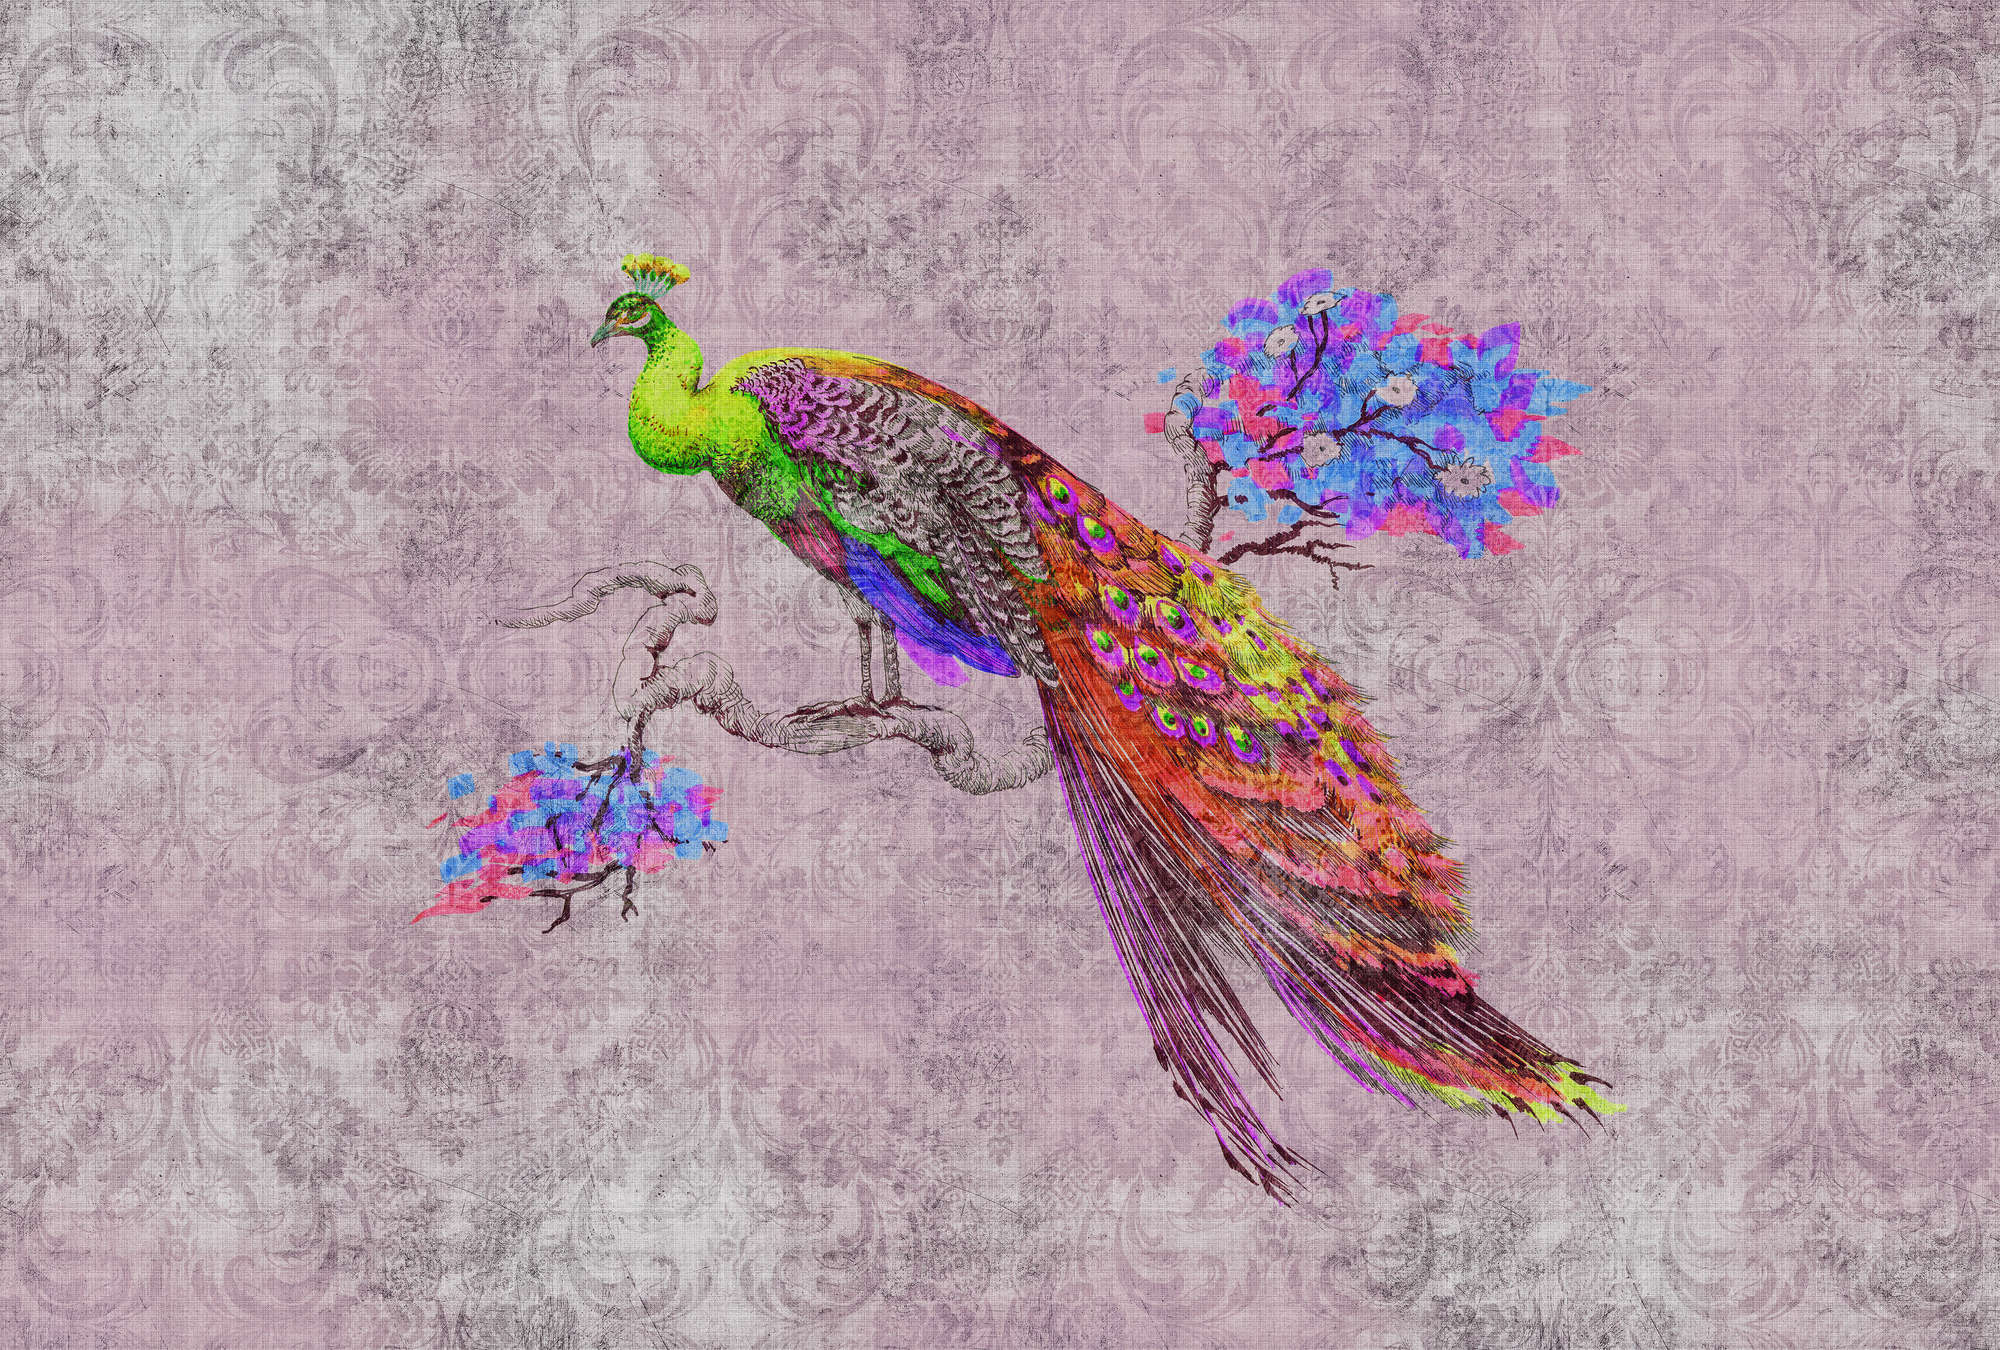             Peacock 2 - Fototapete mit Pfau Motiv & Ornament Muster in naturleinen Struktur – Grün, Rosa | Mattes Glattvlies
        